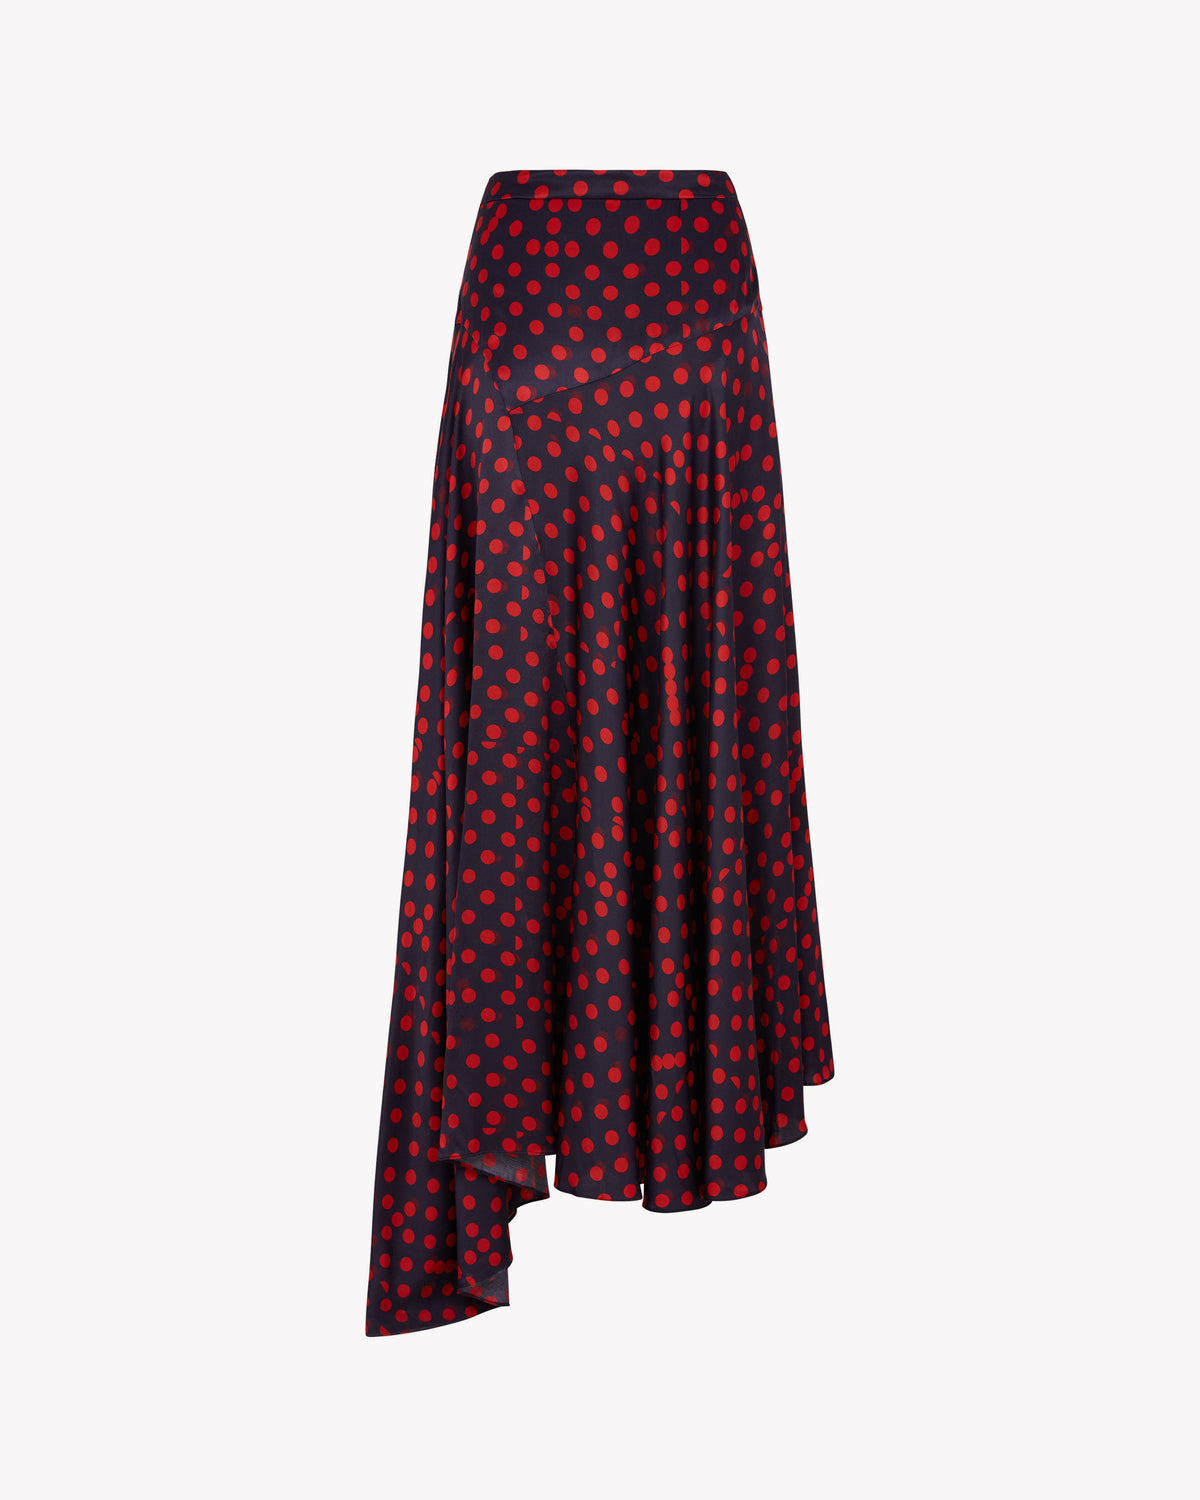 Graphic Polka Dot Asymmetric Maxi Skirt - Navy/Red